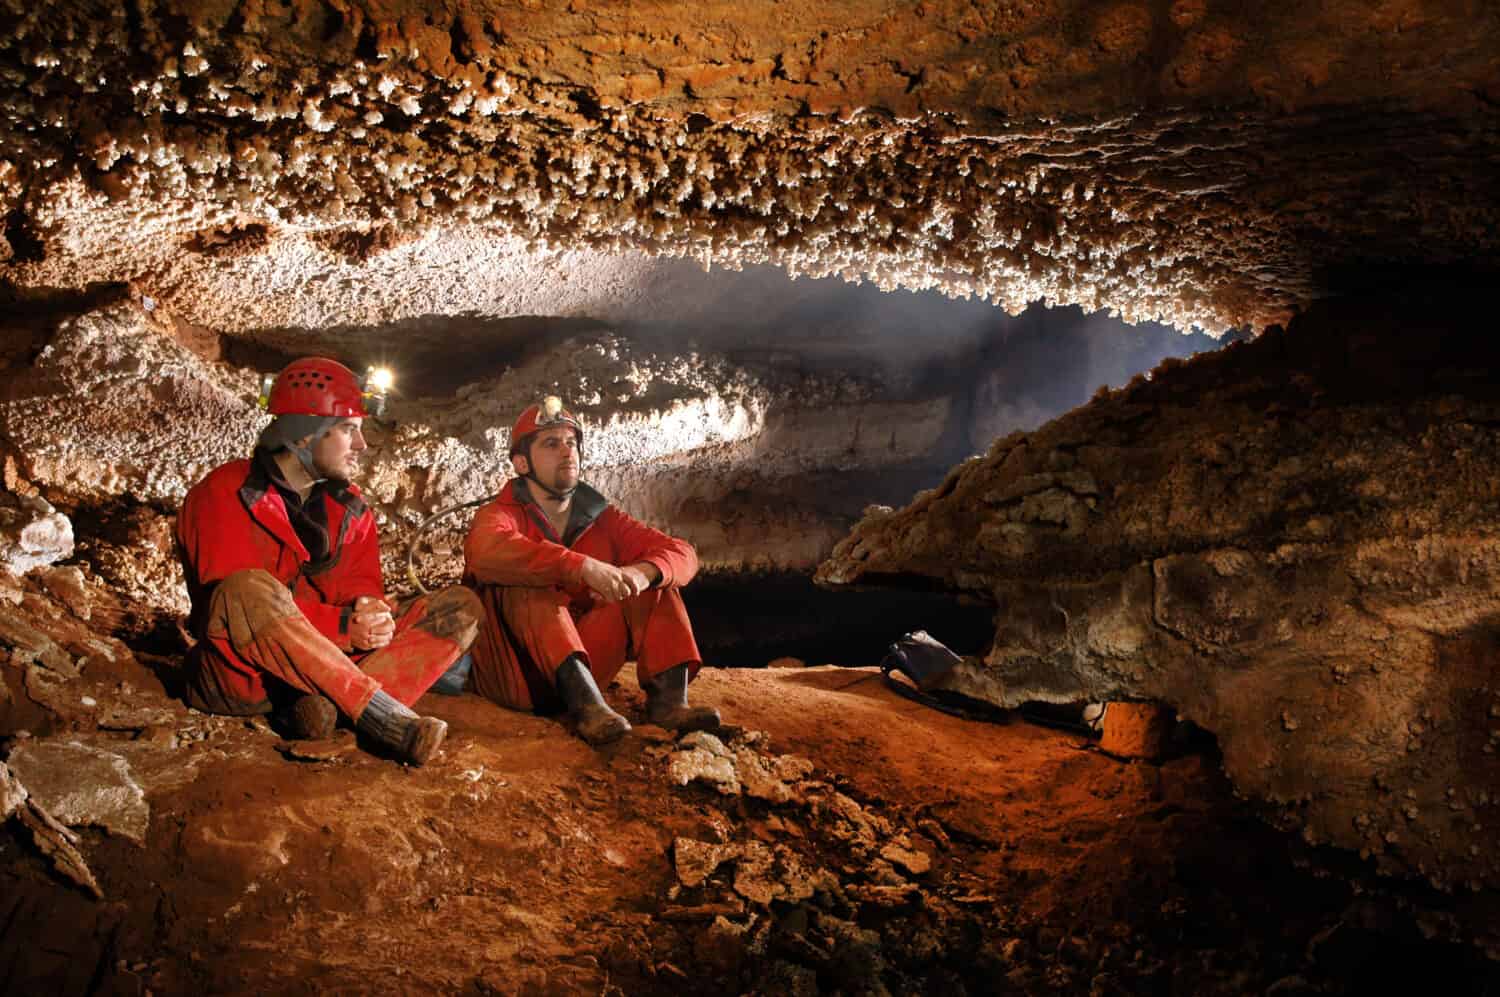 Cavers exploring a beautiful cave